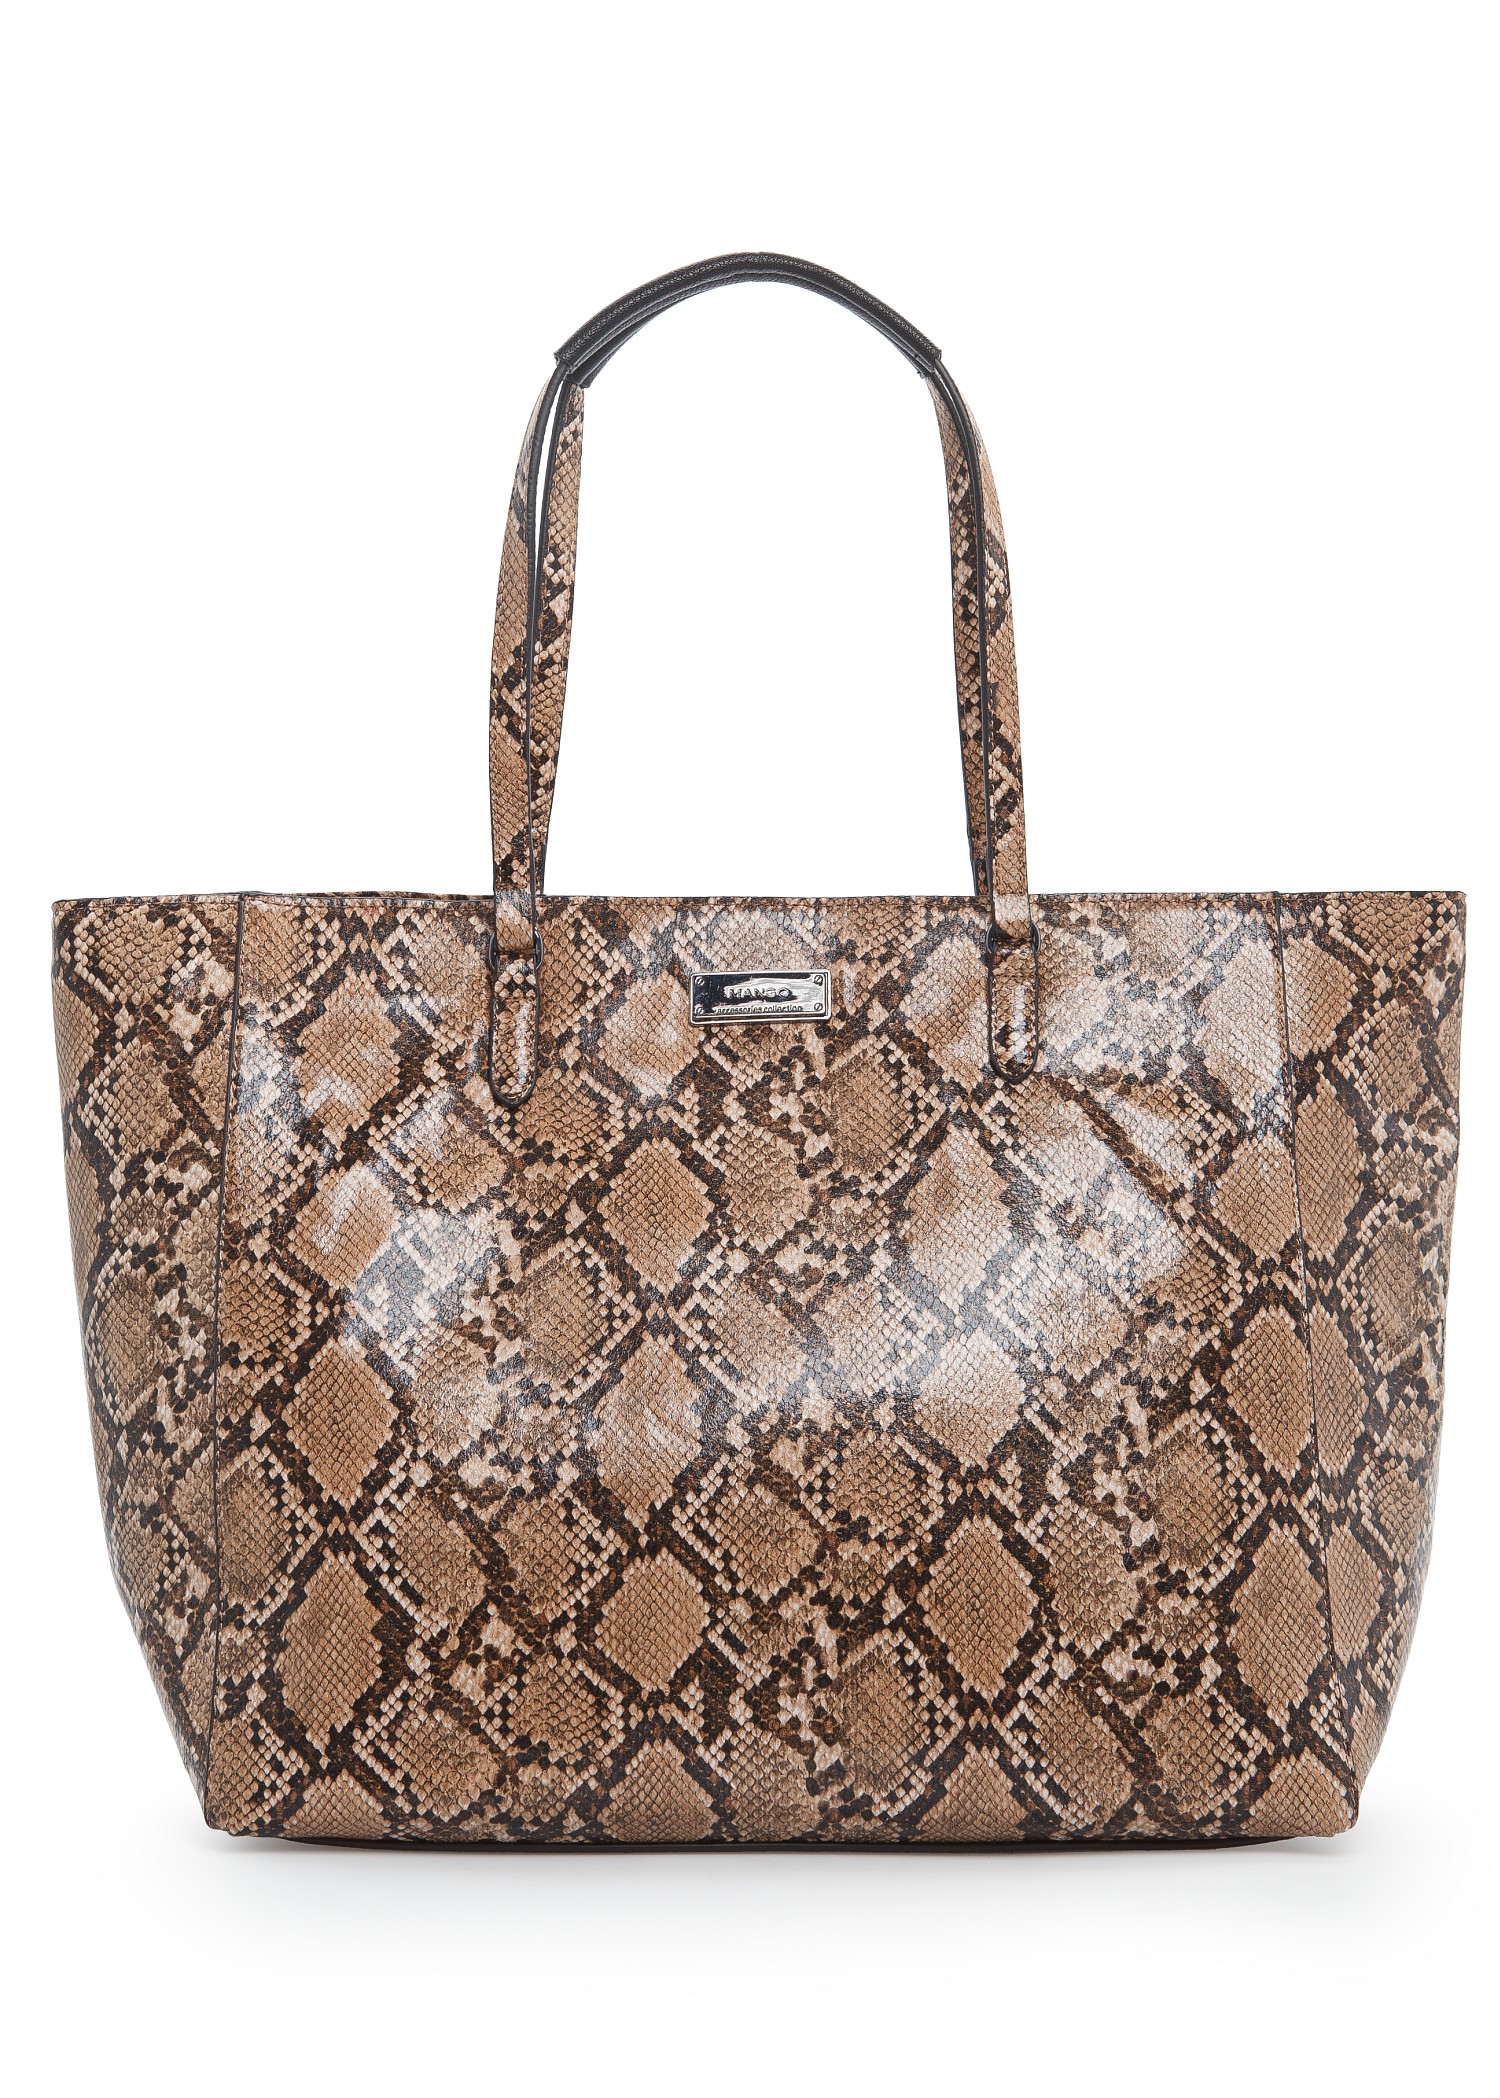 MANGO Bags & Handbags for Women on sale - Outlet | FASHIOLA.co.uk